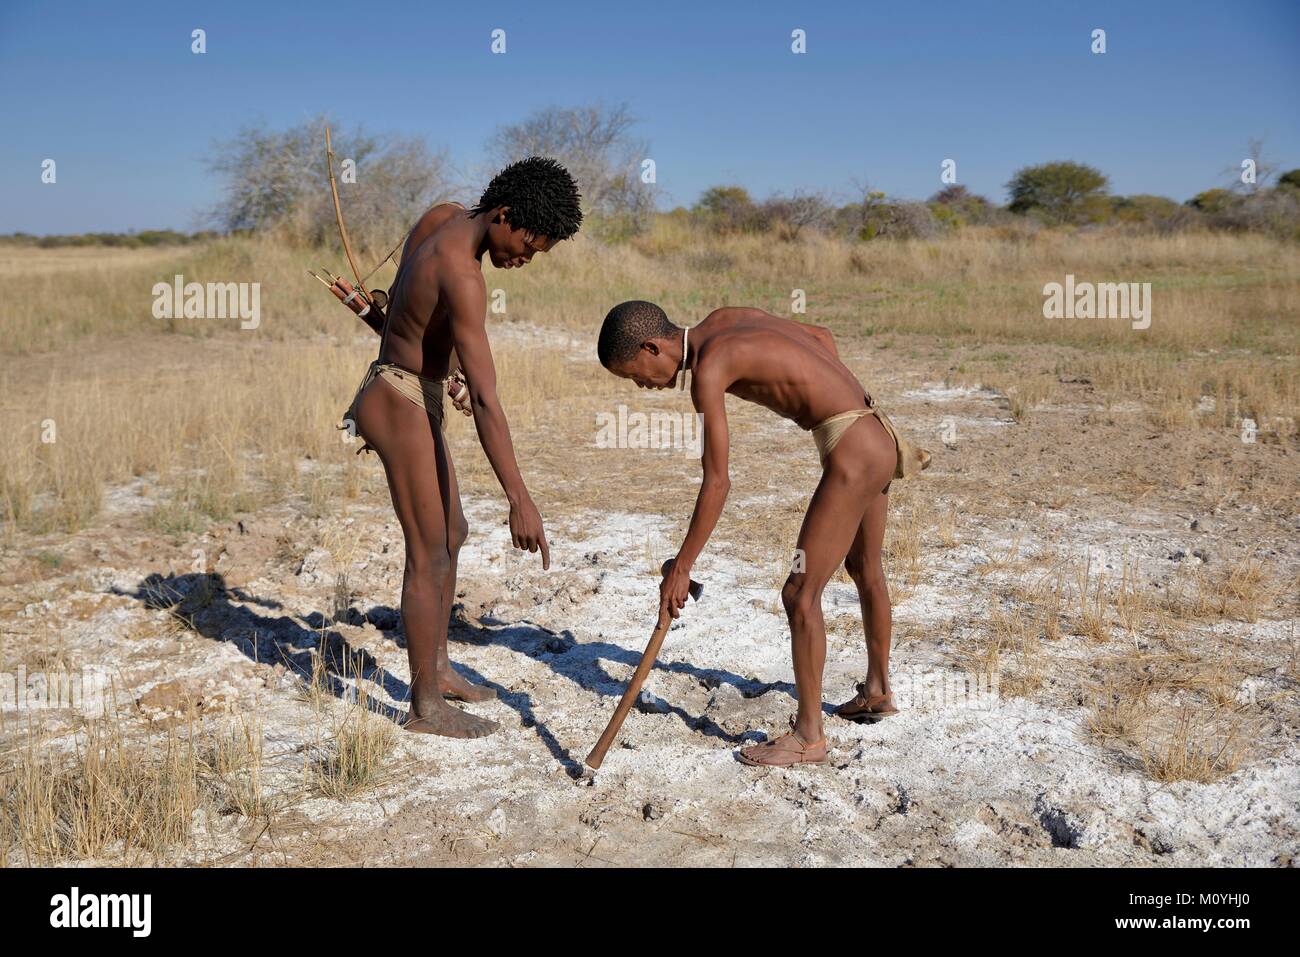 Les bushmen de Ju/" Hoansi-San,chasse lire les pistes,village //Xa/oba,près de Tsumkwe Otjozondjupa,région,Namibie Banque D'Images